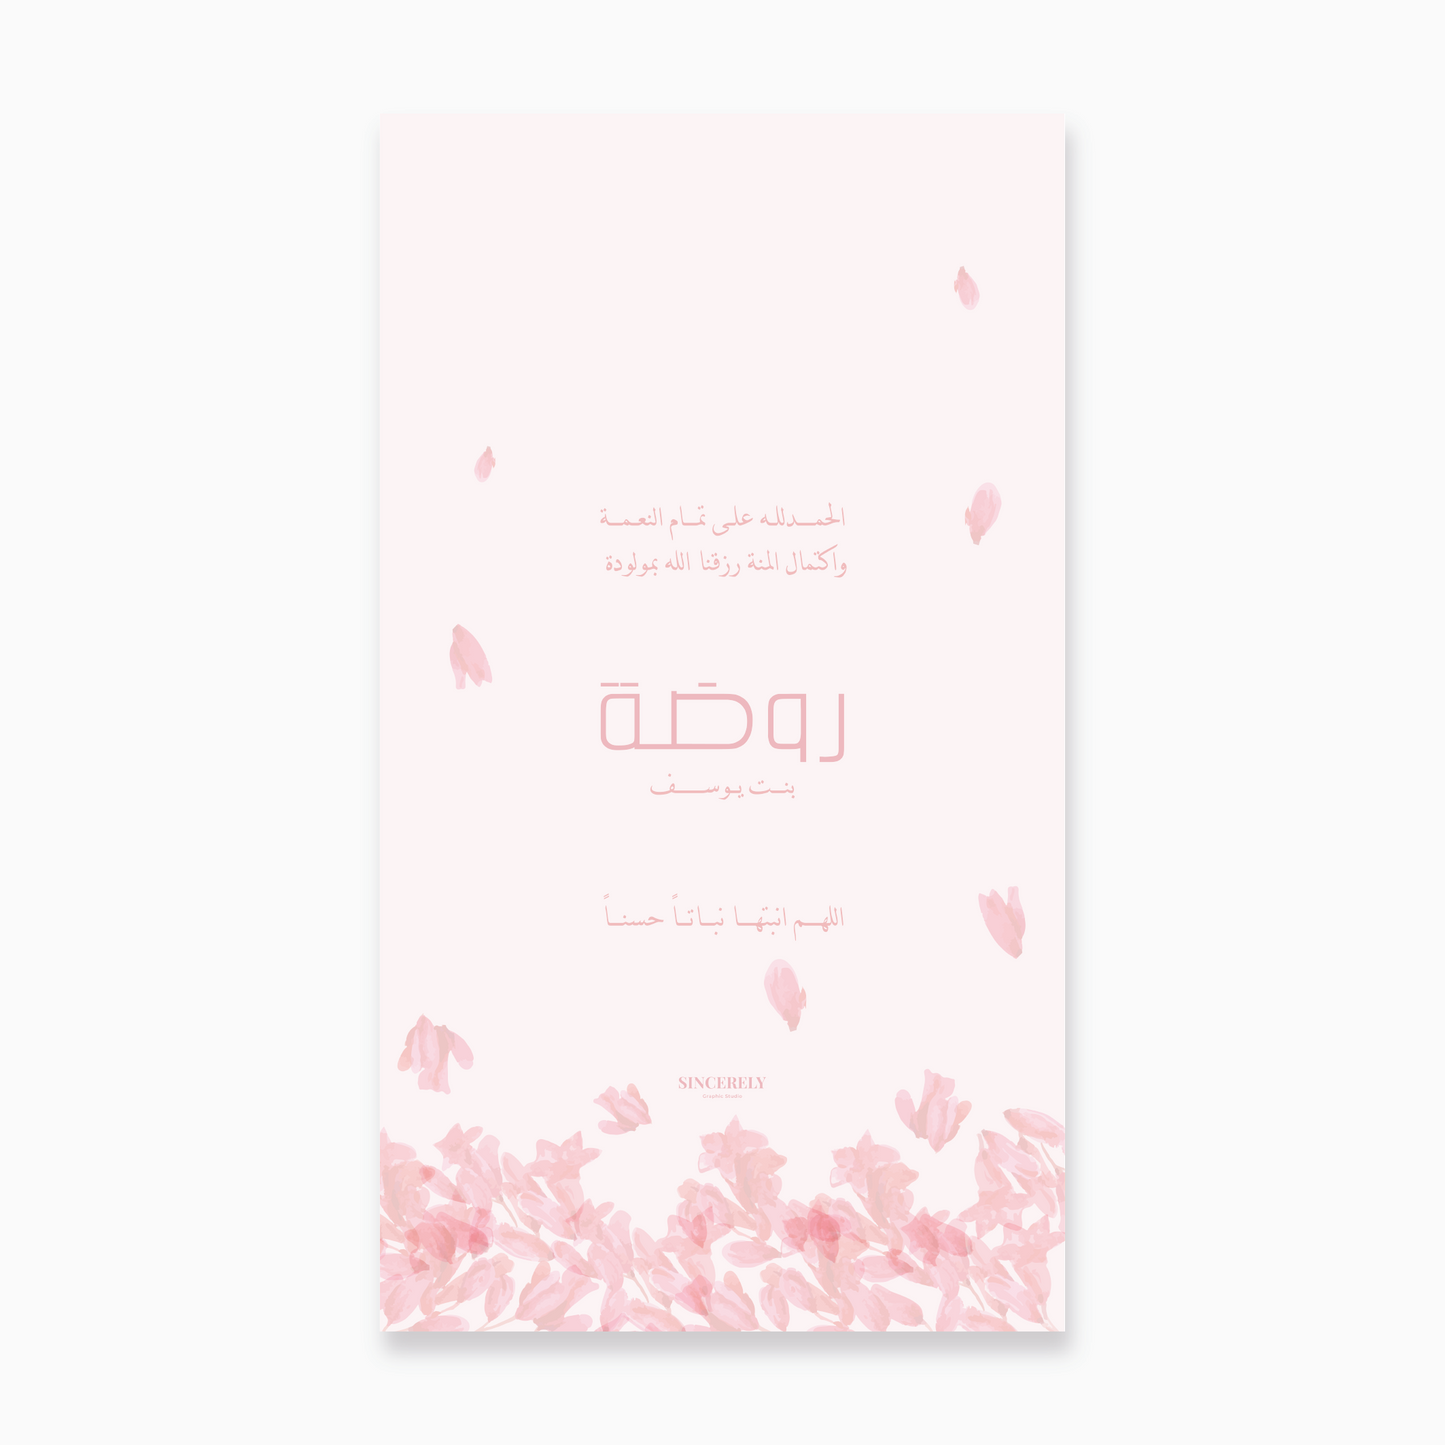 Blossoms design